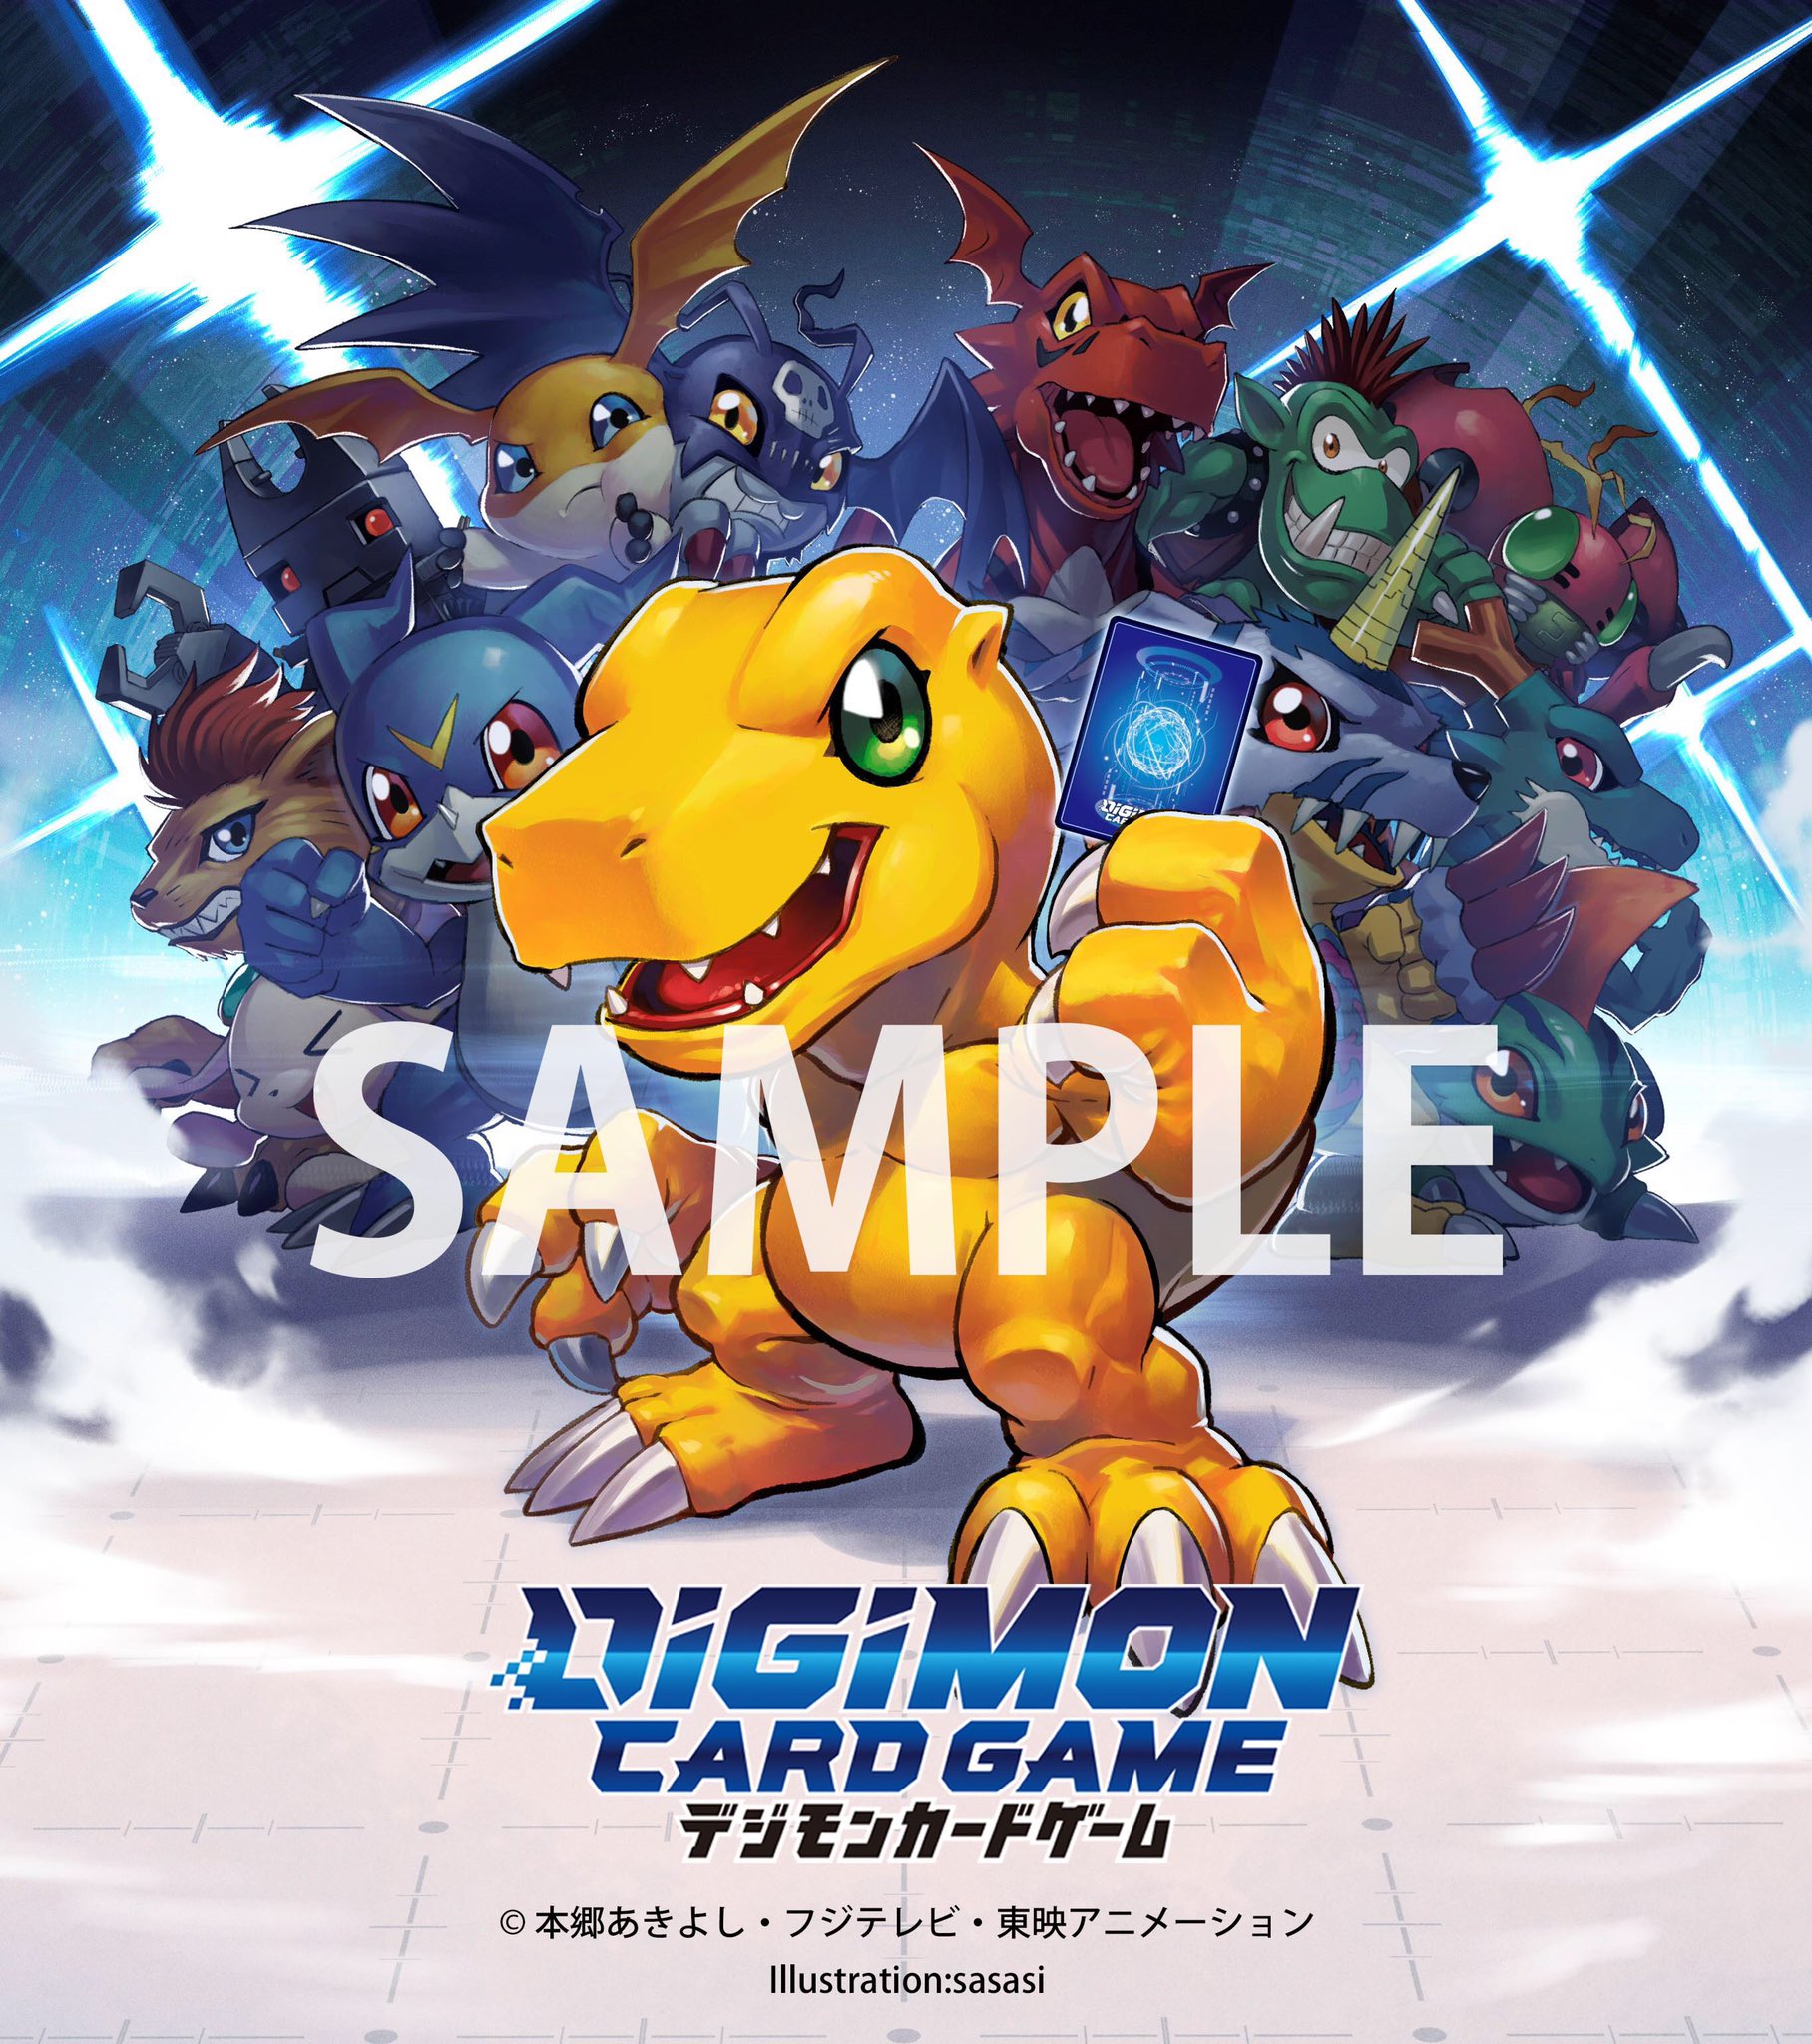 Juegos de mesa o rol - Página 2 Digimoncardart_january26_2020